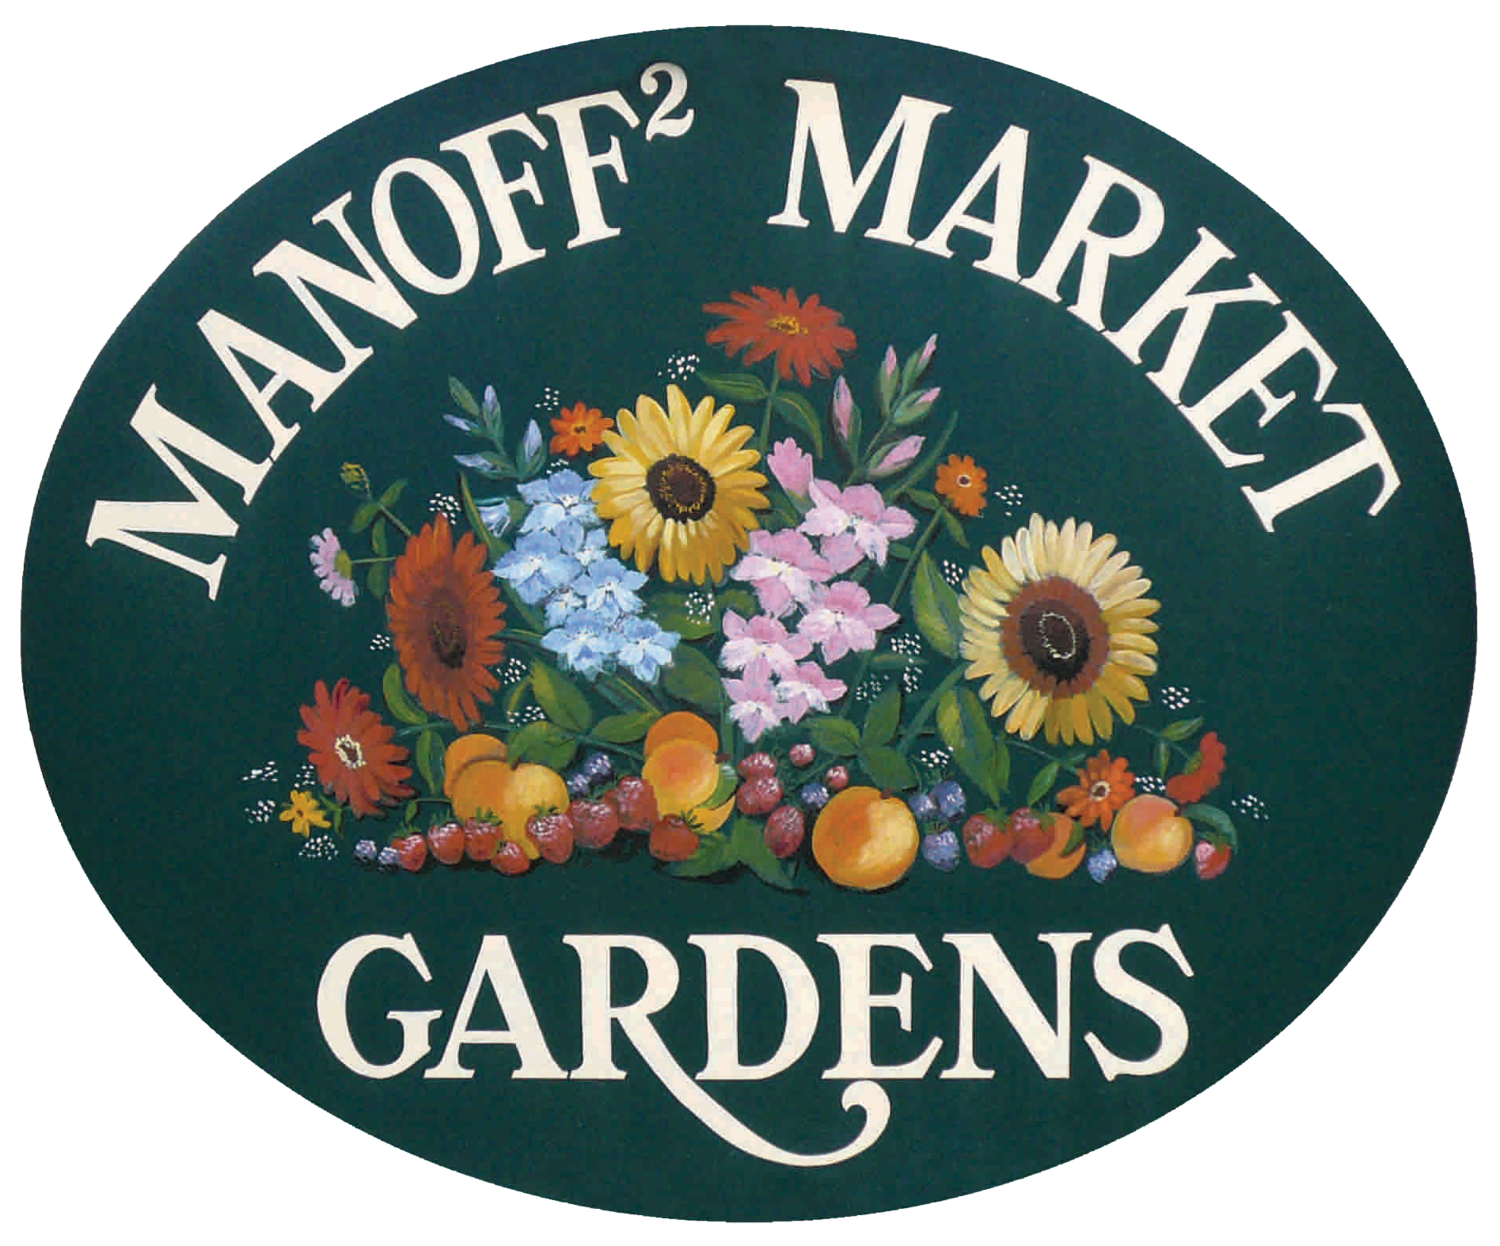 Manoff Market Gardens